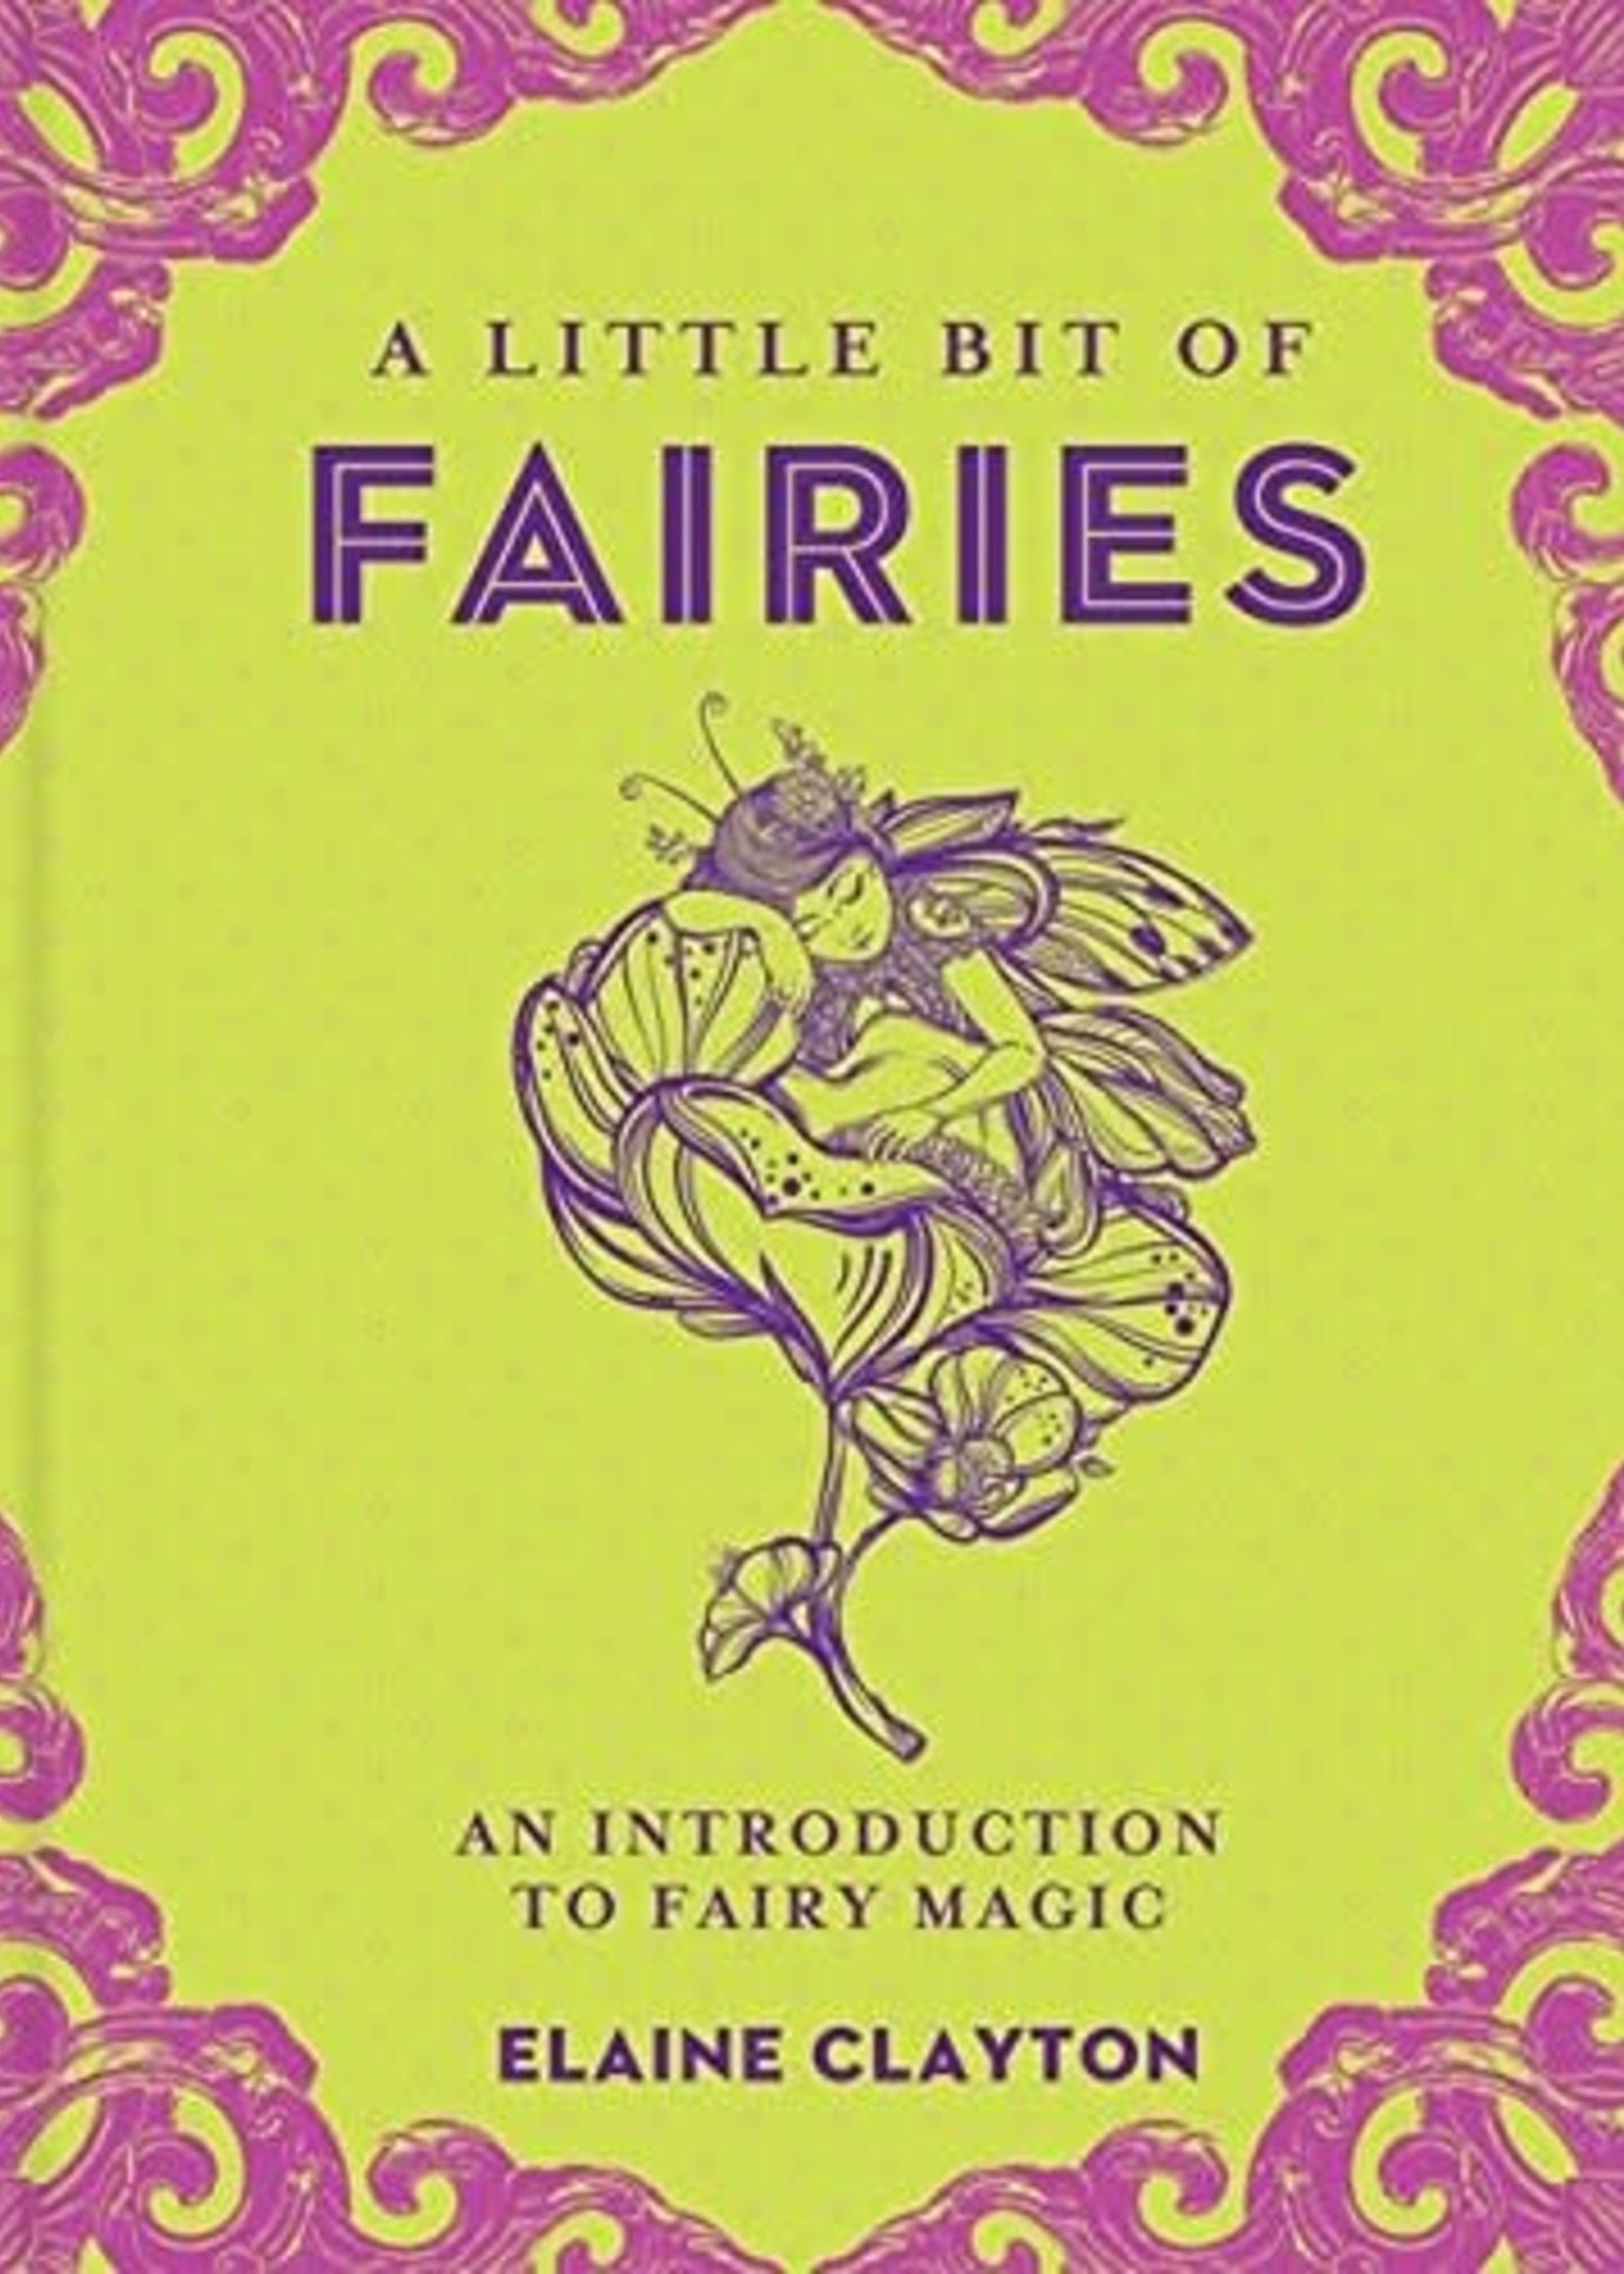 A Little Bit of Fairies- An Introduction to Fairy Magic